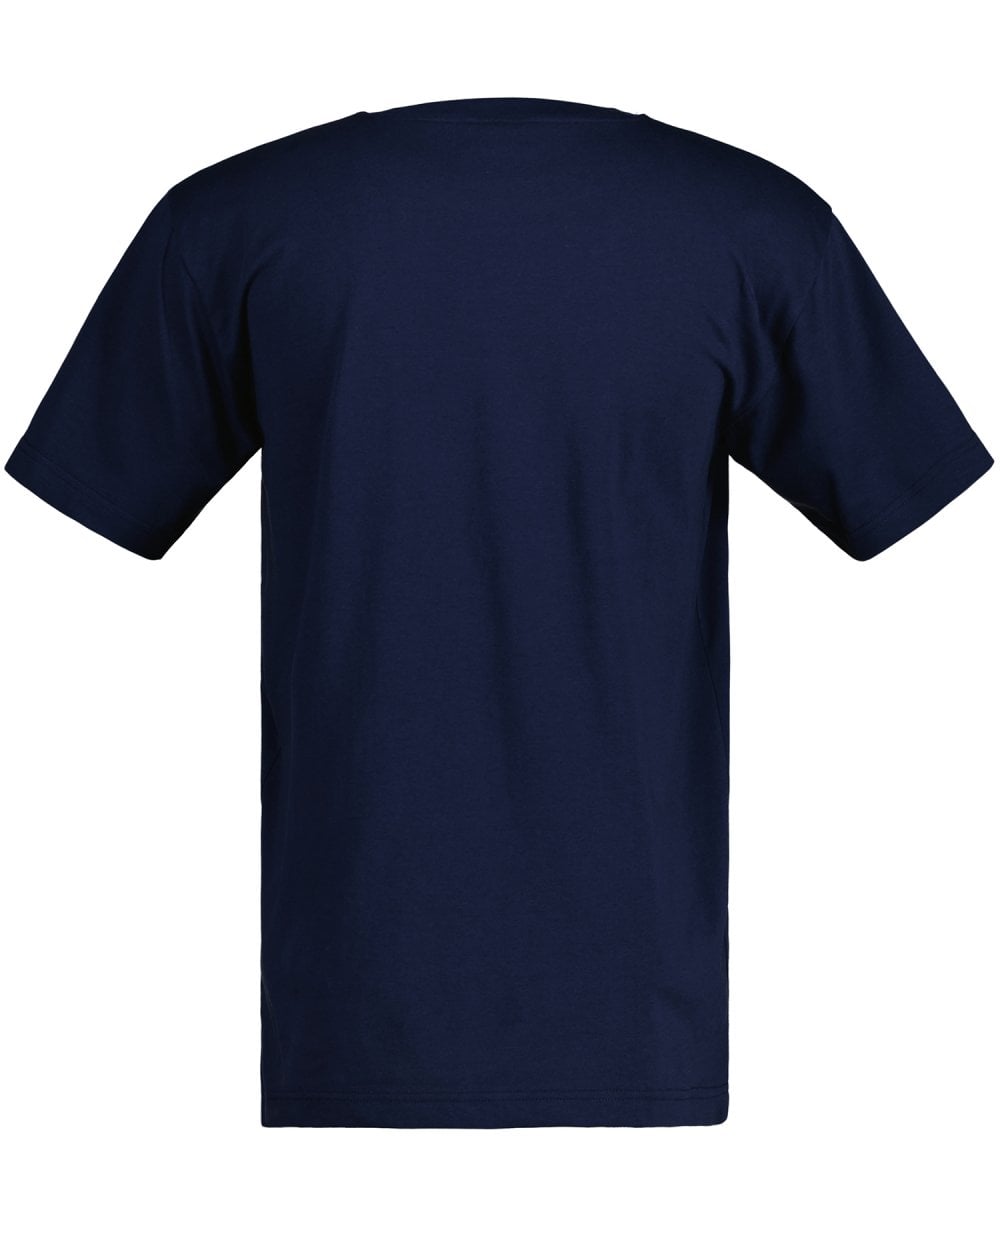 Retro Crest T-Shirt